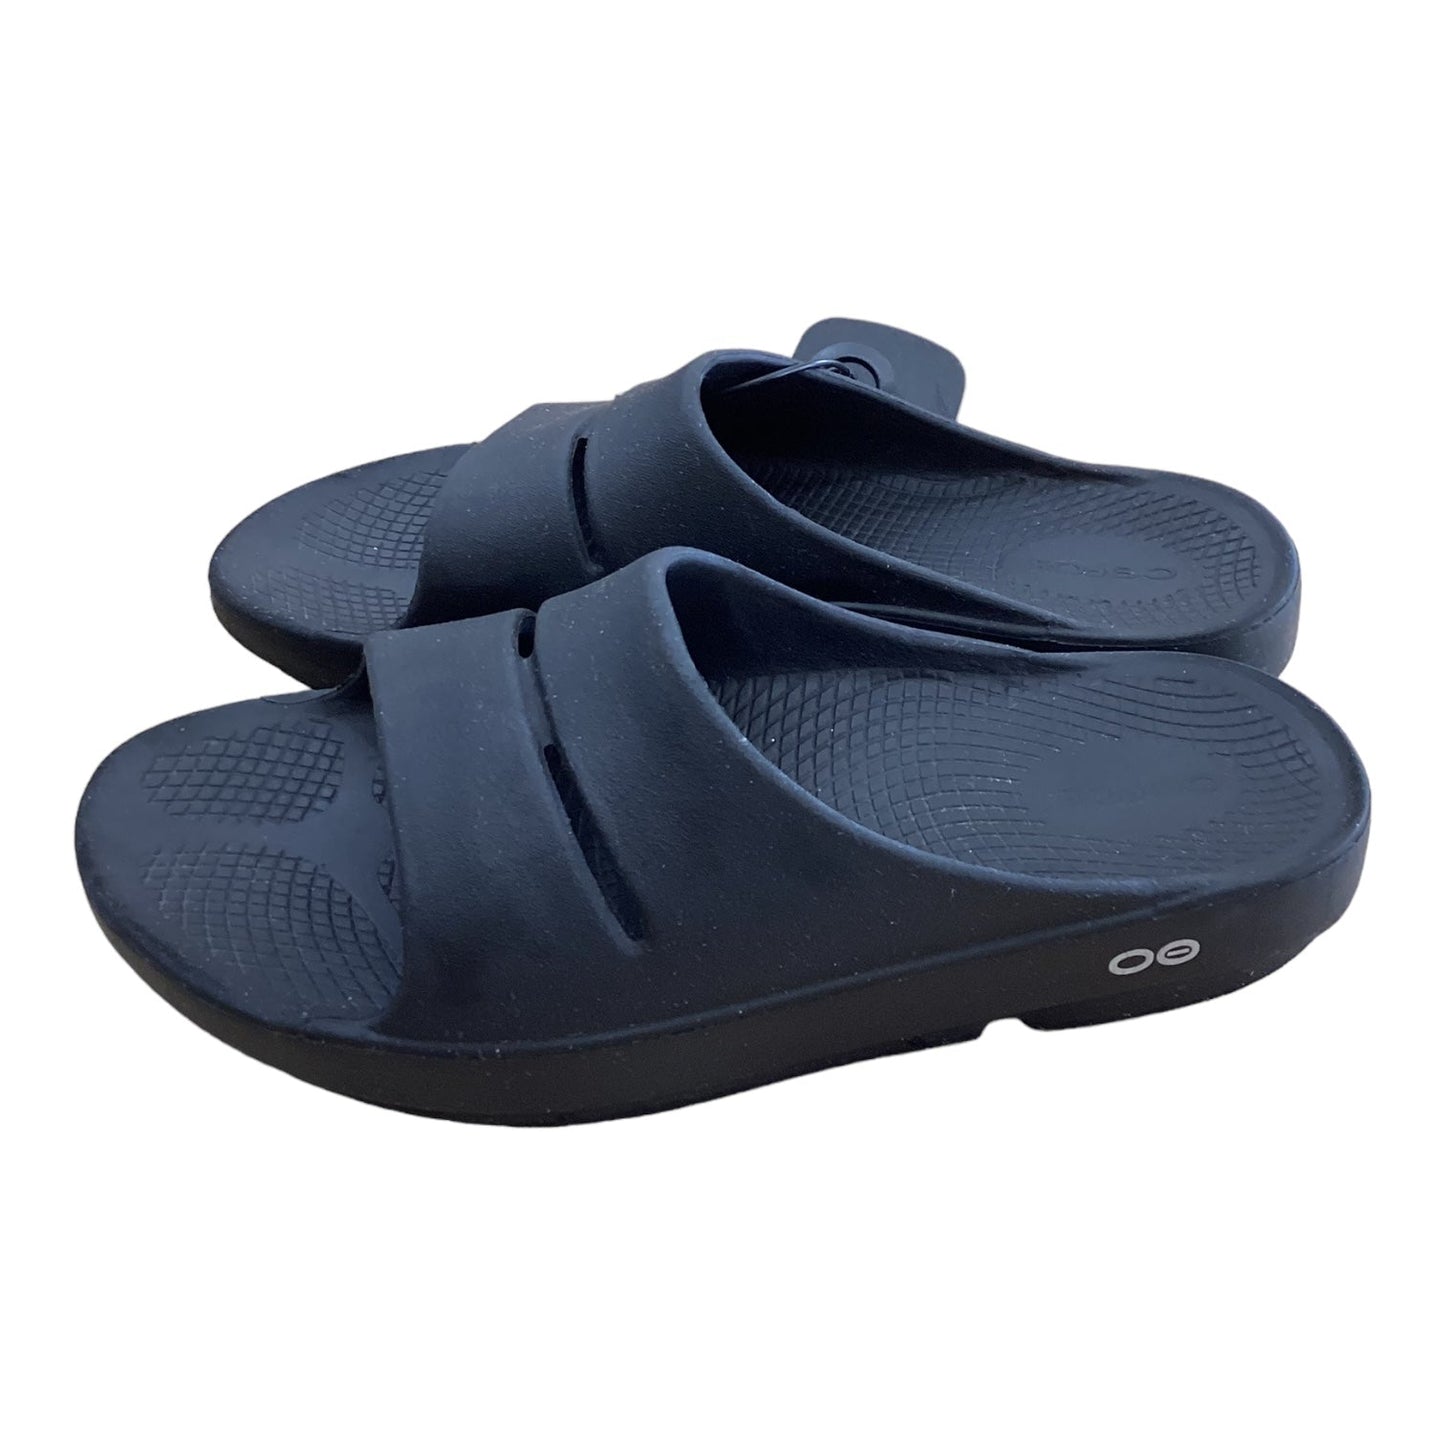 Black Sandals Flats Oofos, Size 8